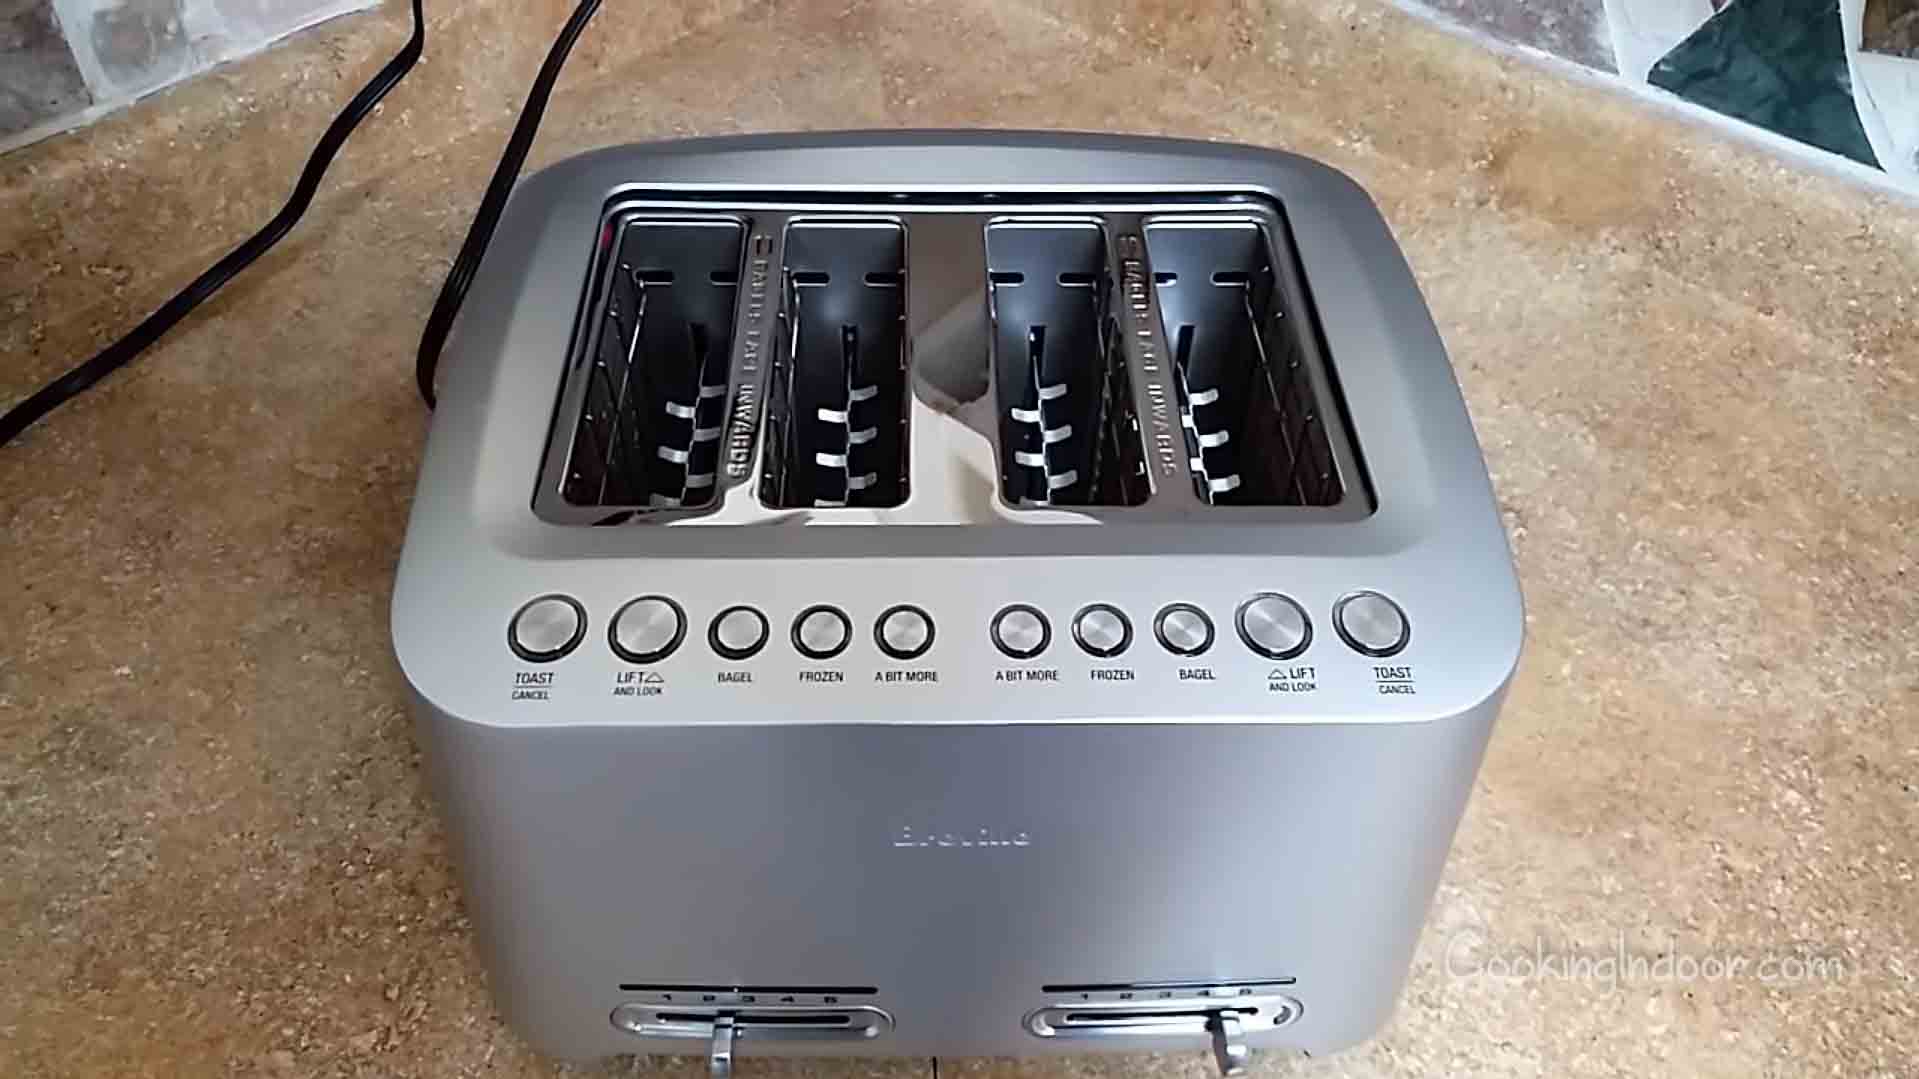 Best big toaster